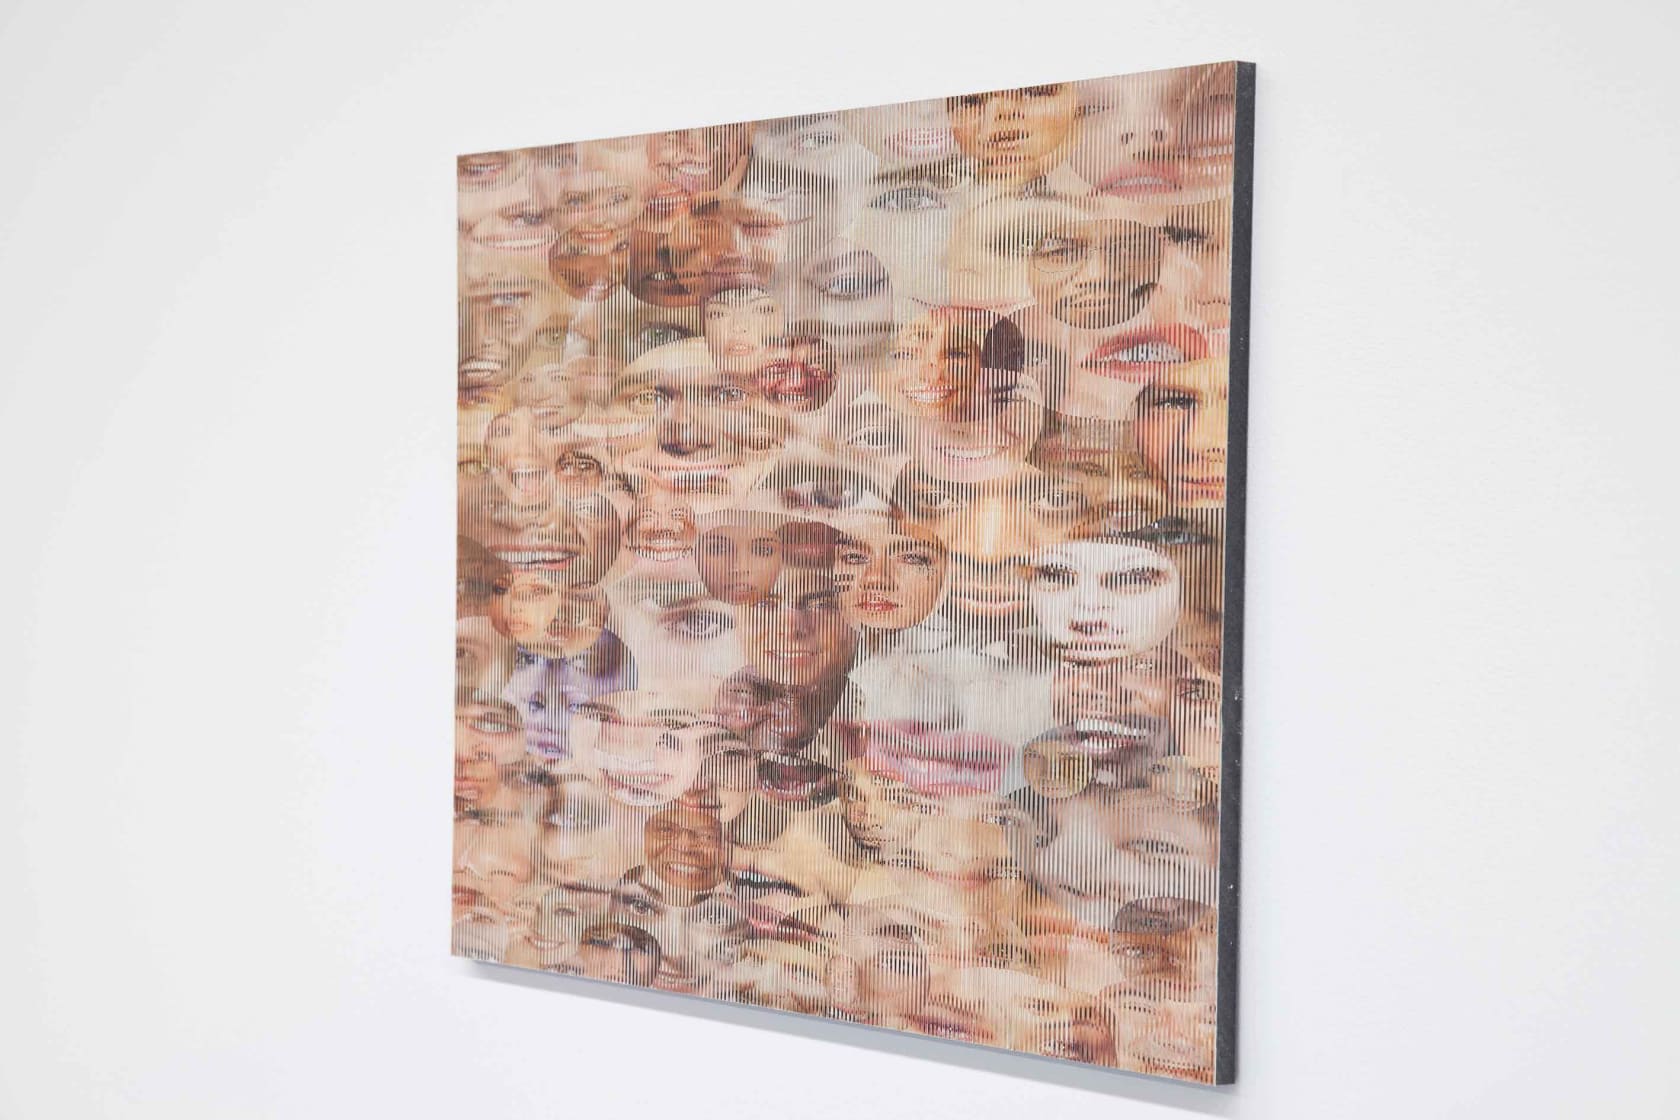 Tom Friedman, Untitled (face collage), 2011 Stephen